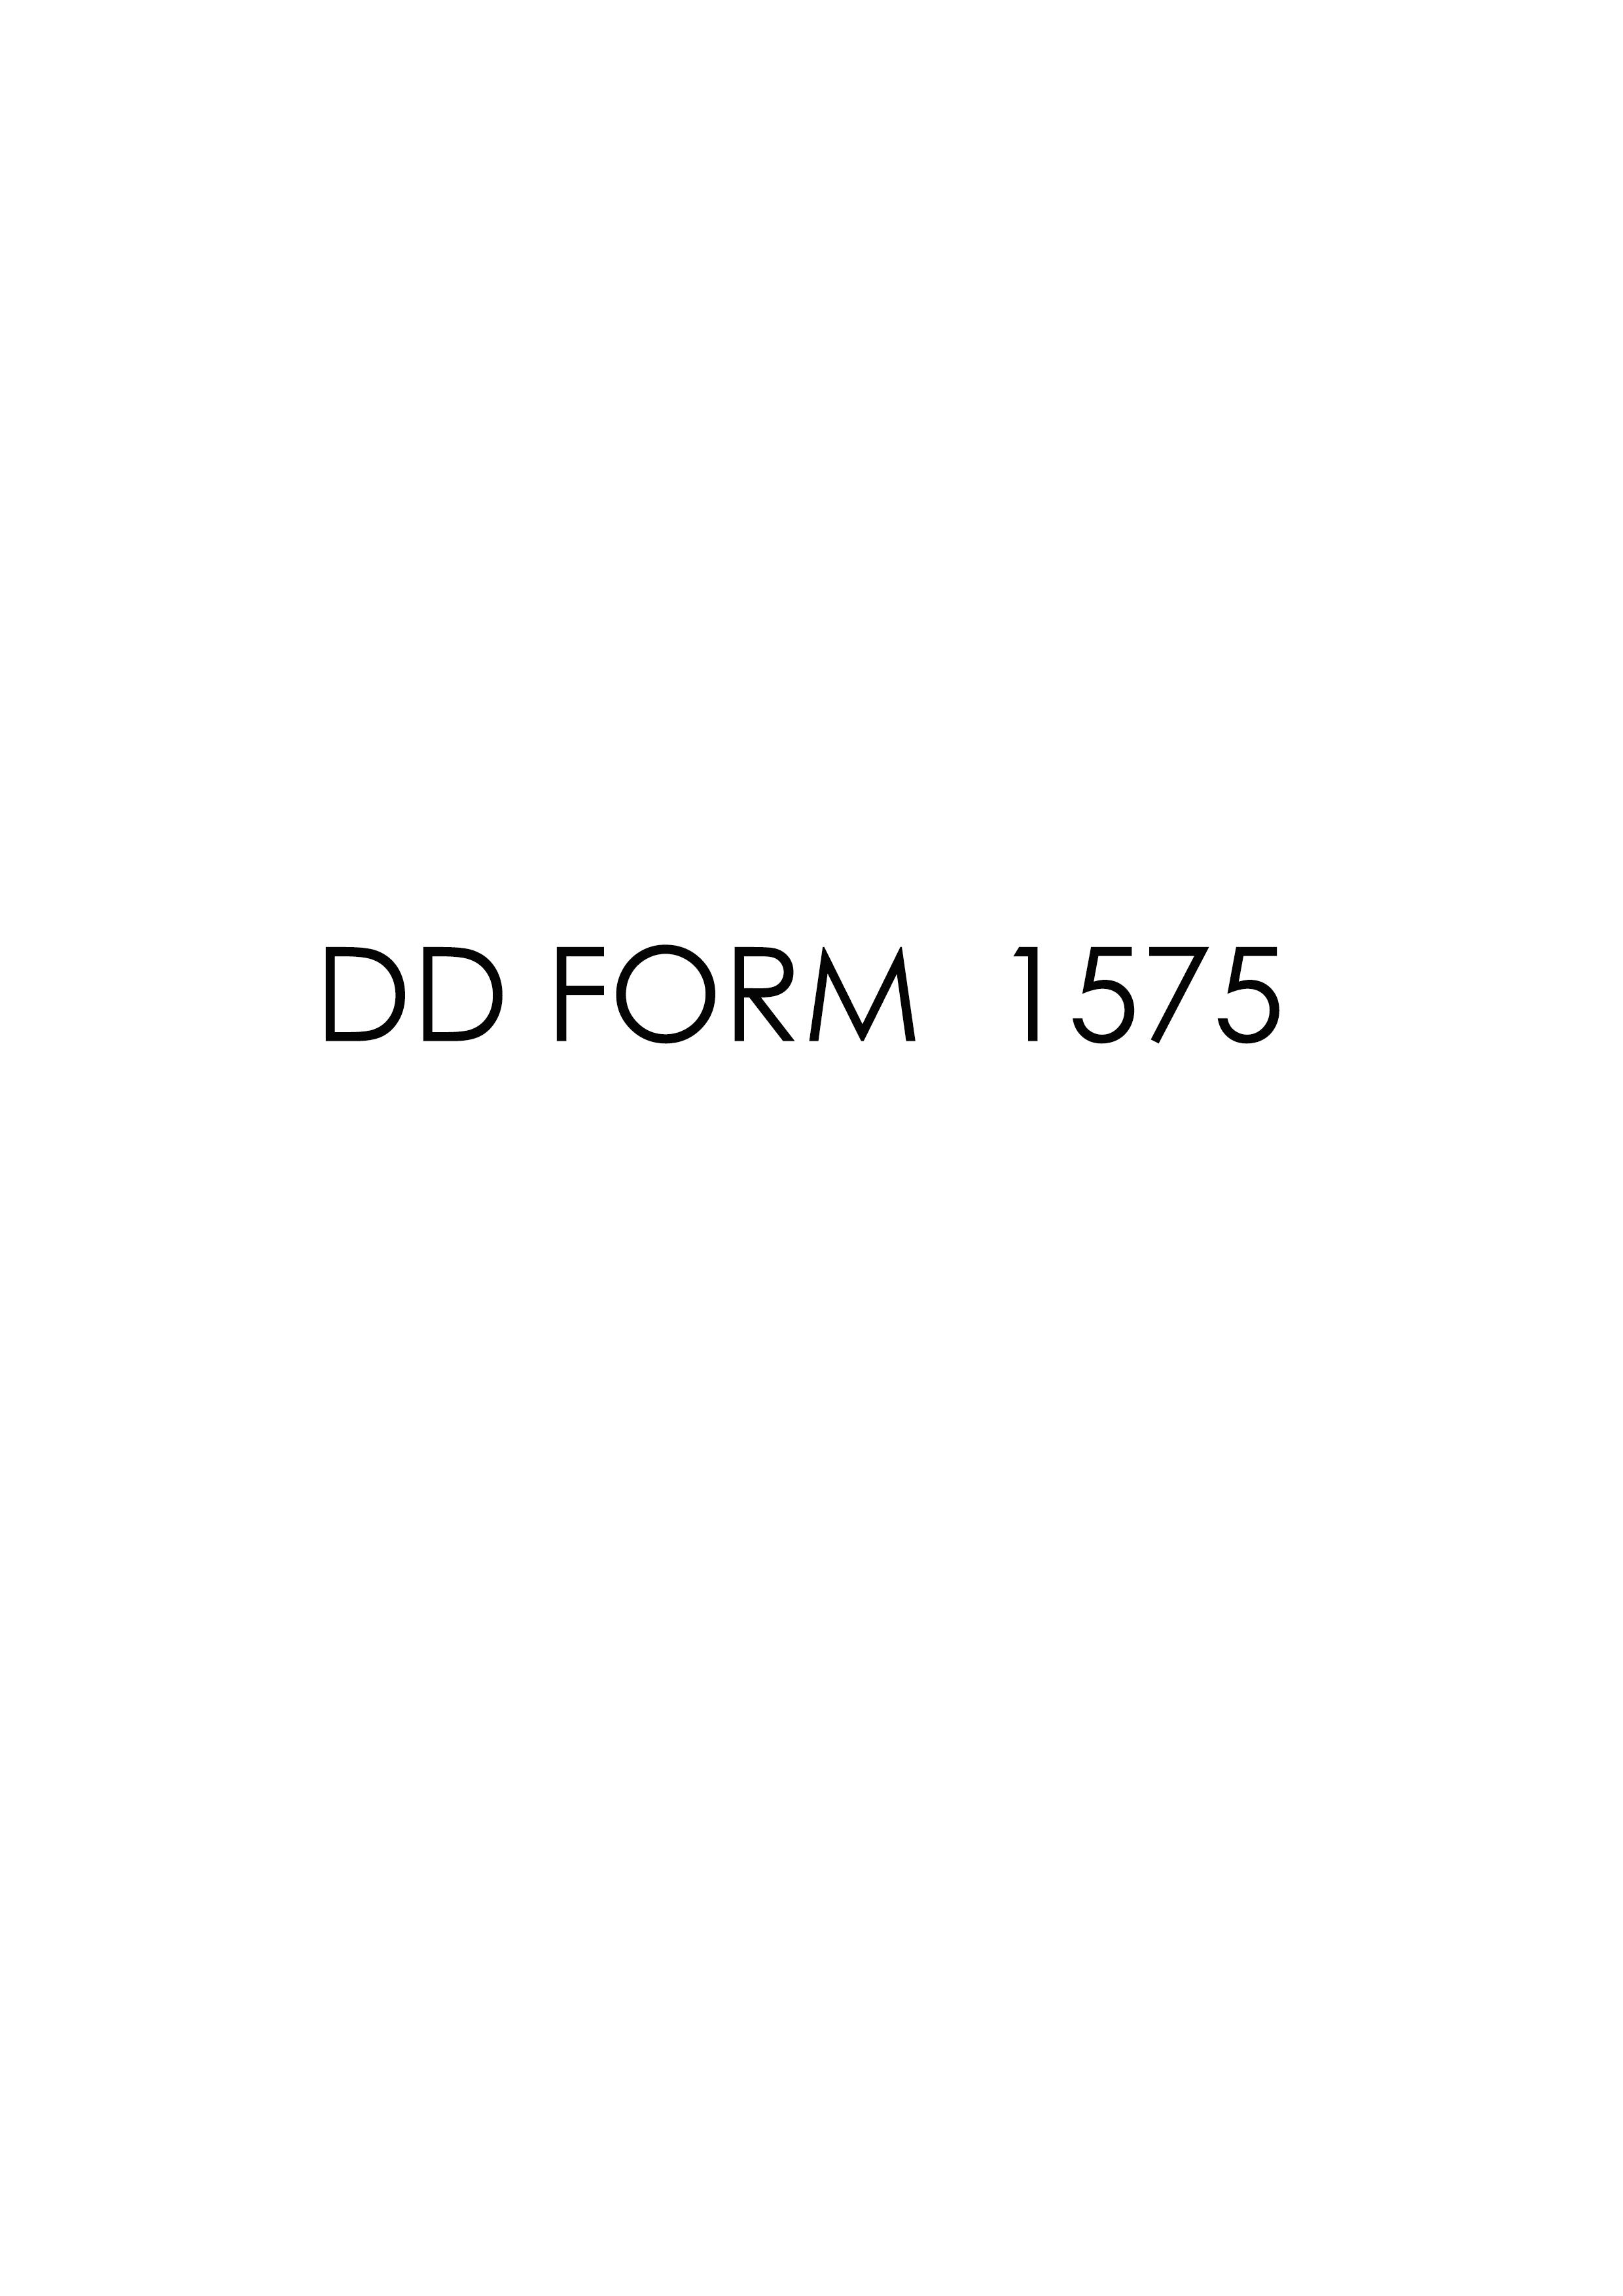 Download dd 1575 Form